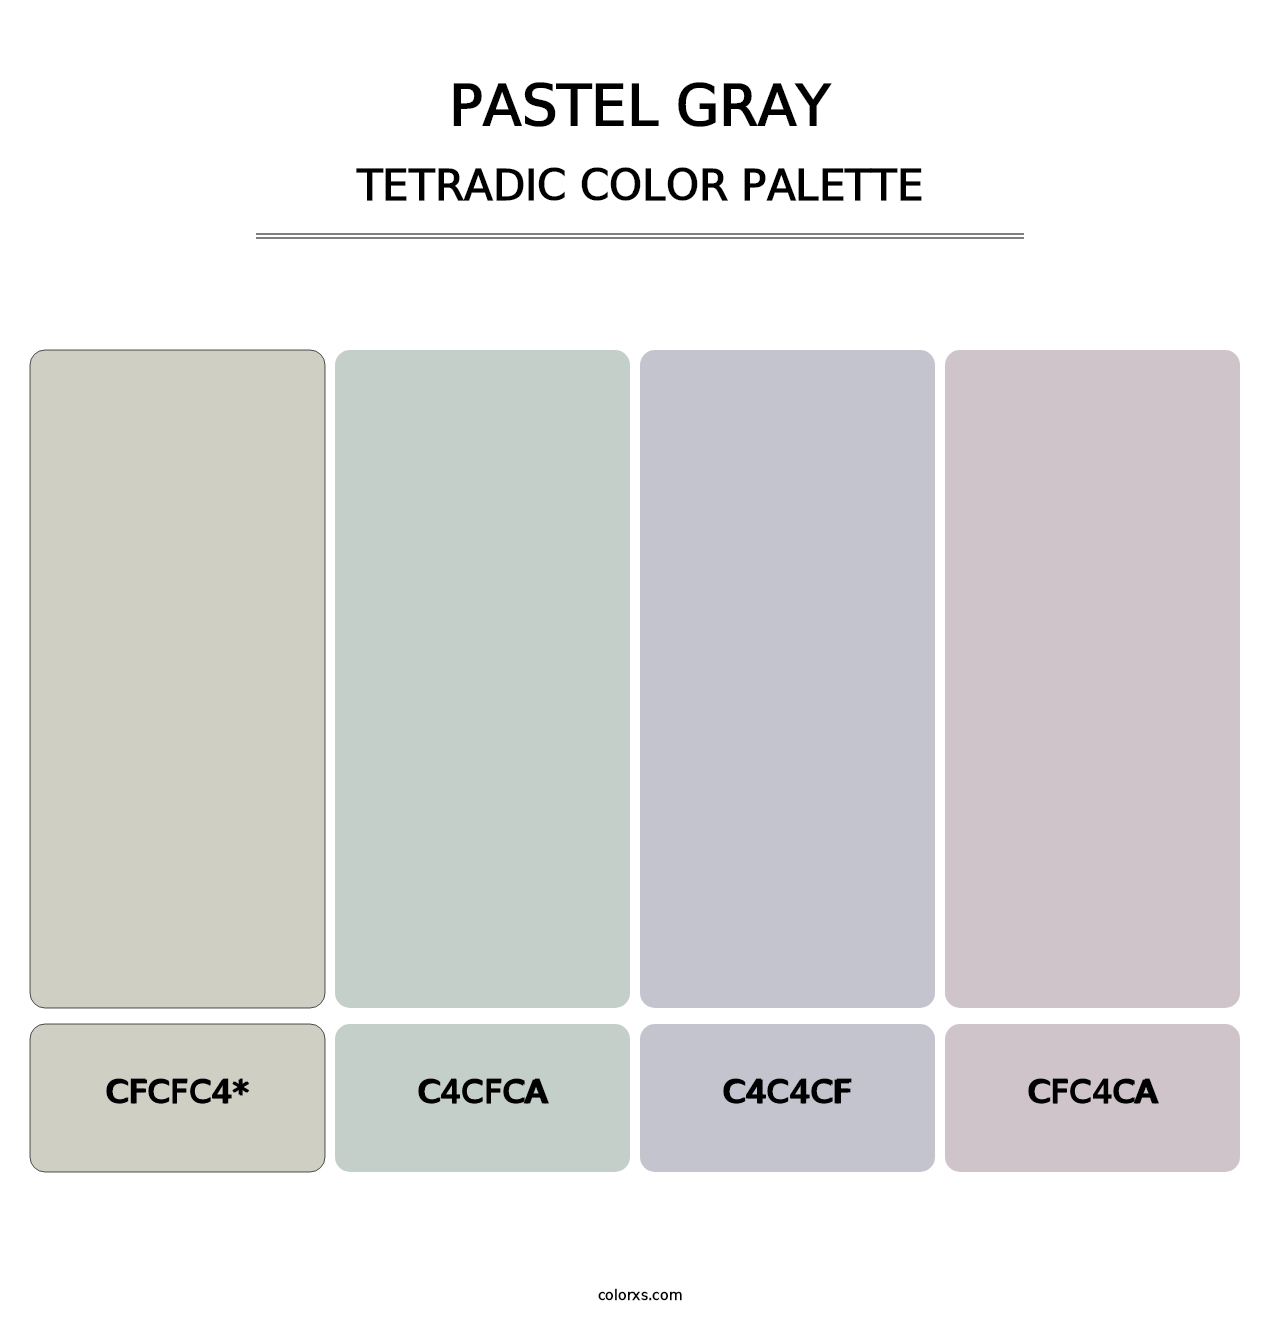 Pastel Gray - Tetradic Color Palette